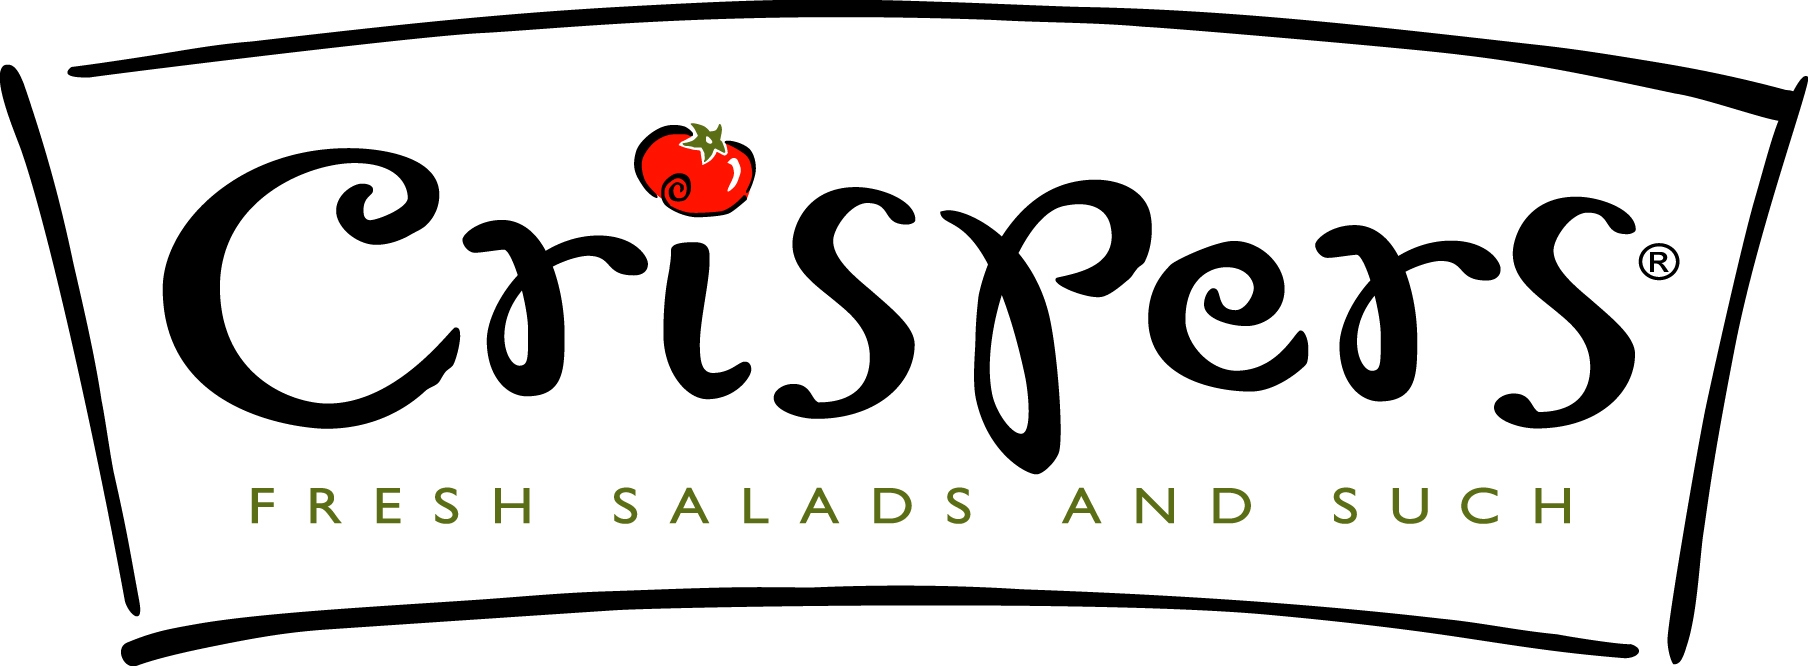 Crispers_Logo